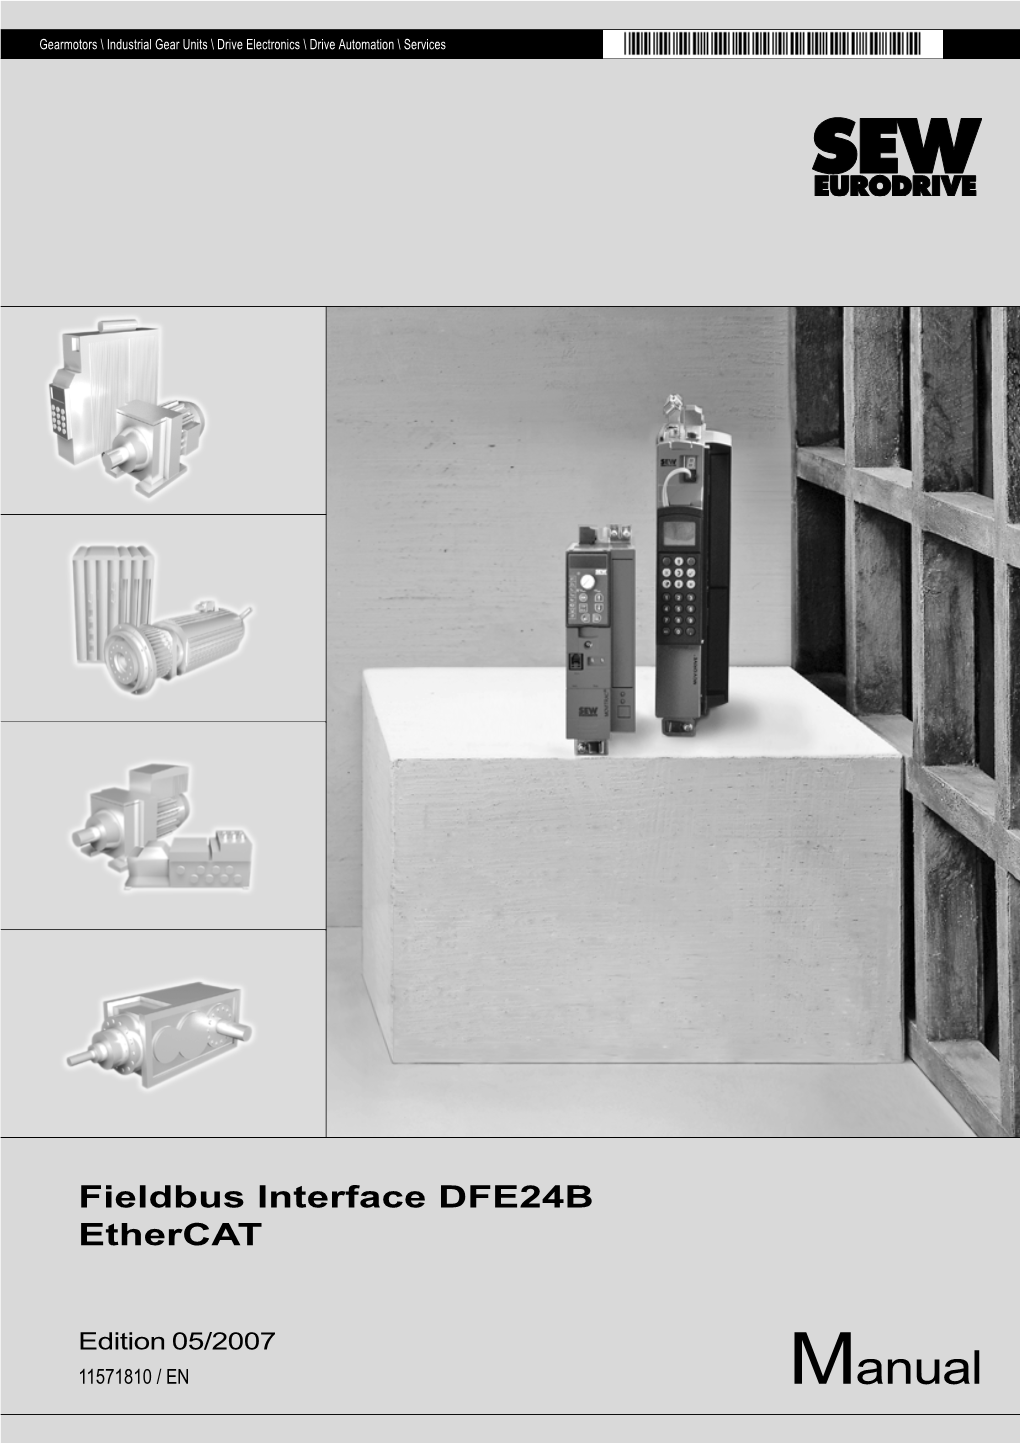 Fieldbus Interface DFE24B Ethercat / Manuals